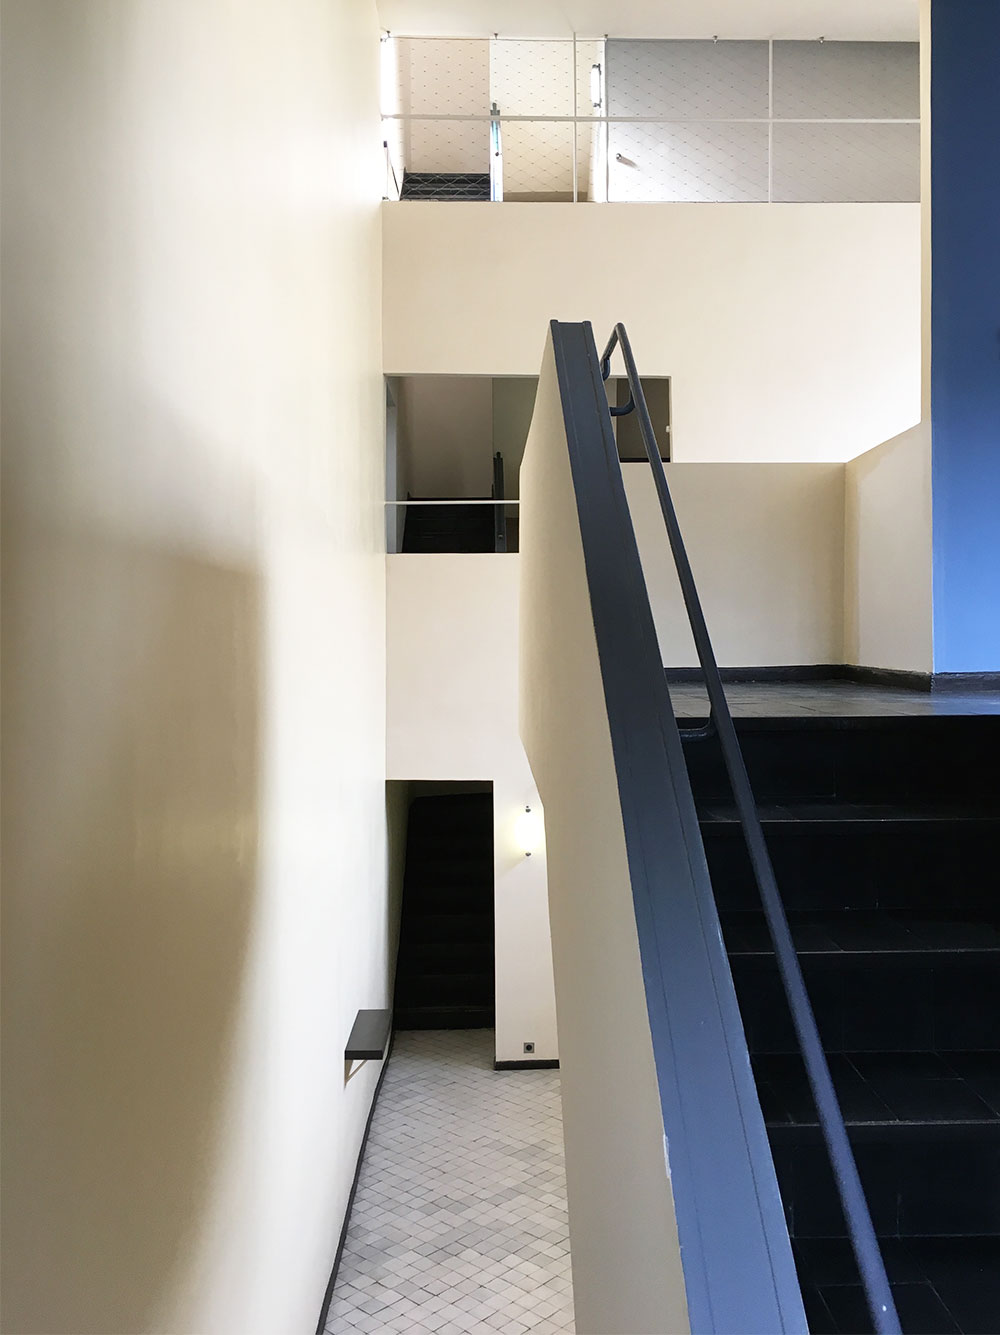 AnnaVP_Le-Corbusier_Architecture4.jpg